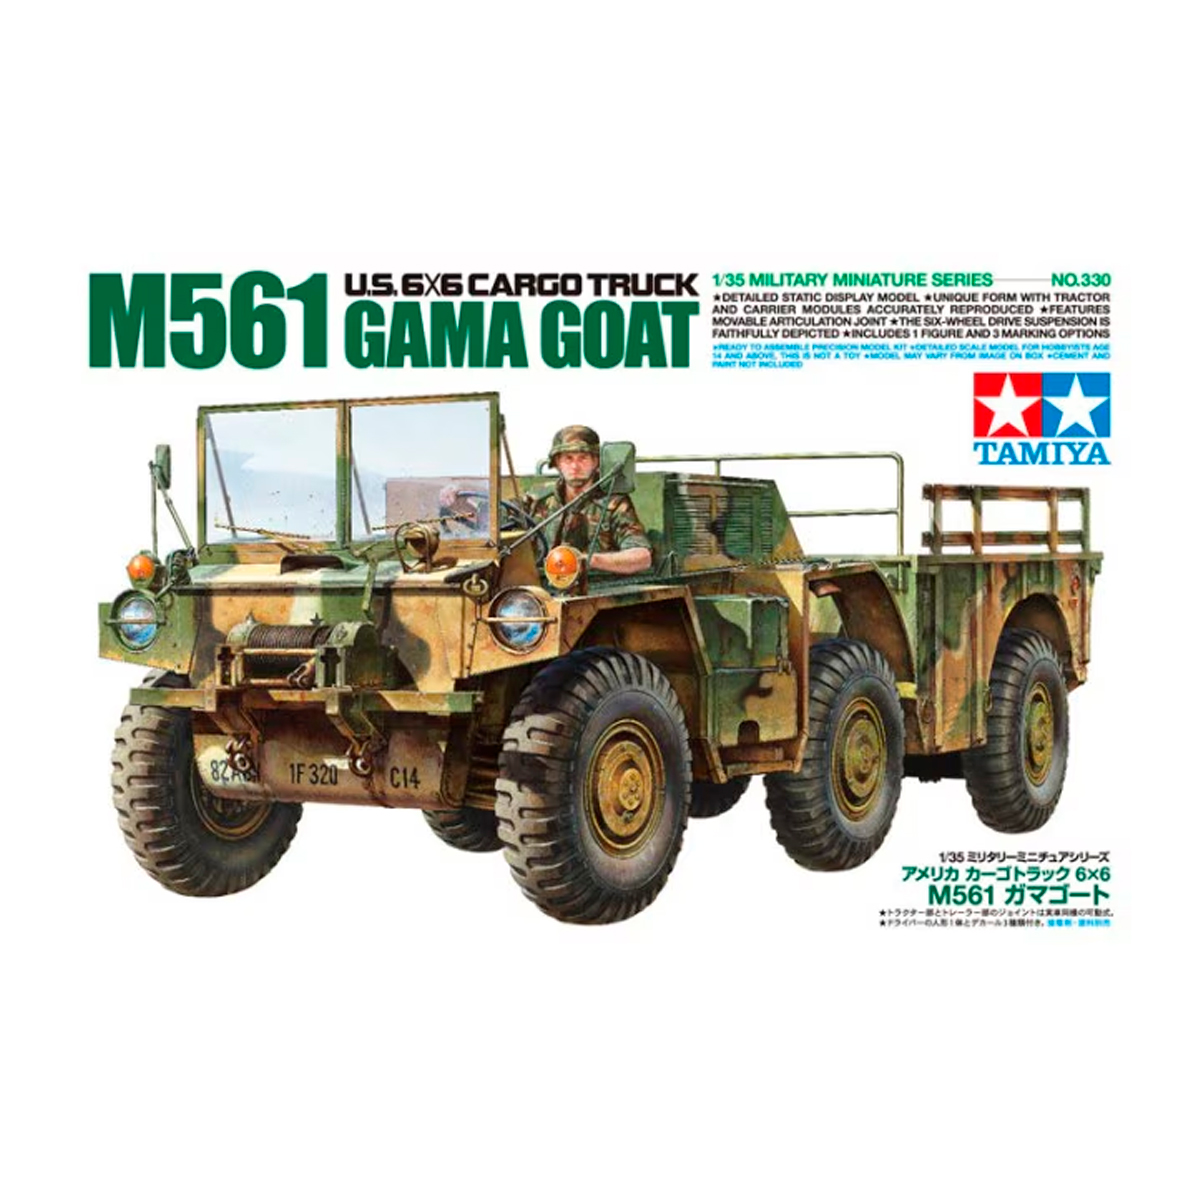 1/35 US 6×6 Cargo Truck Gama Goat